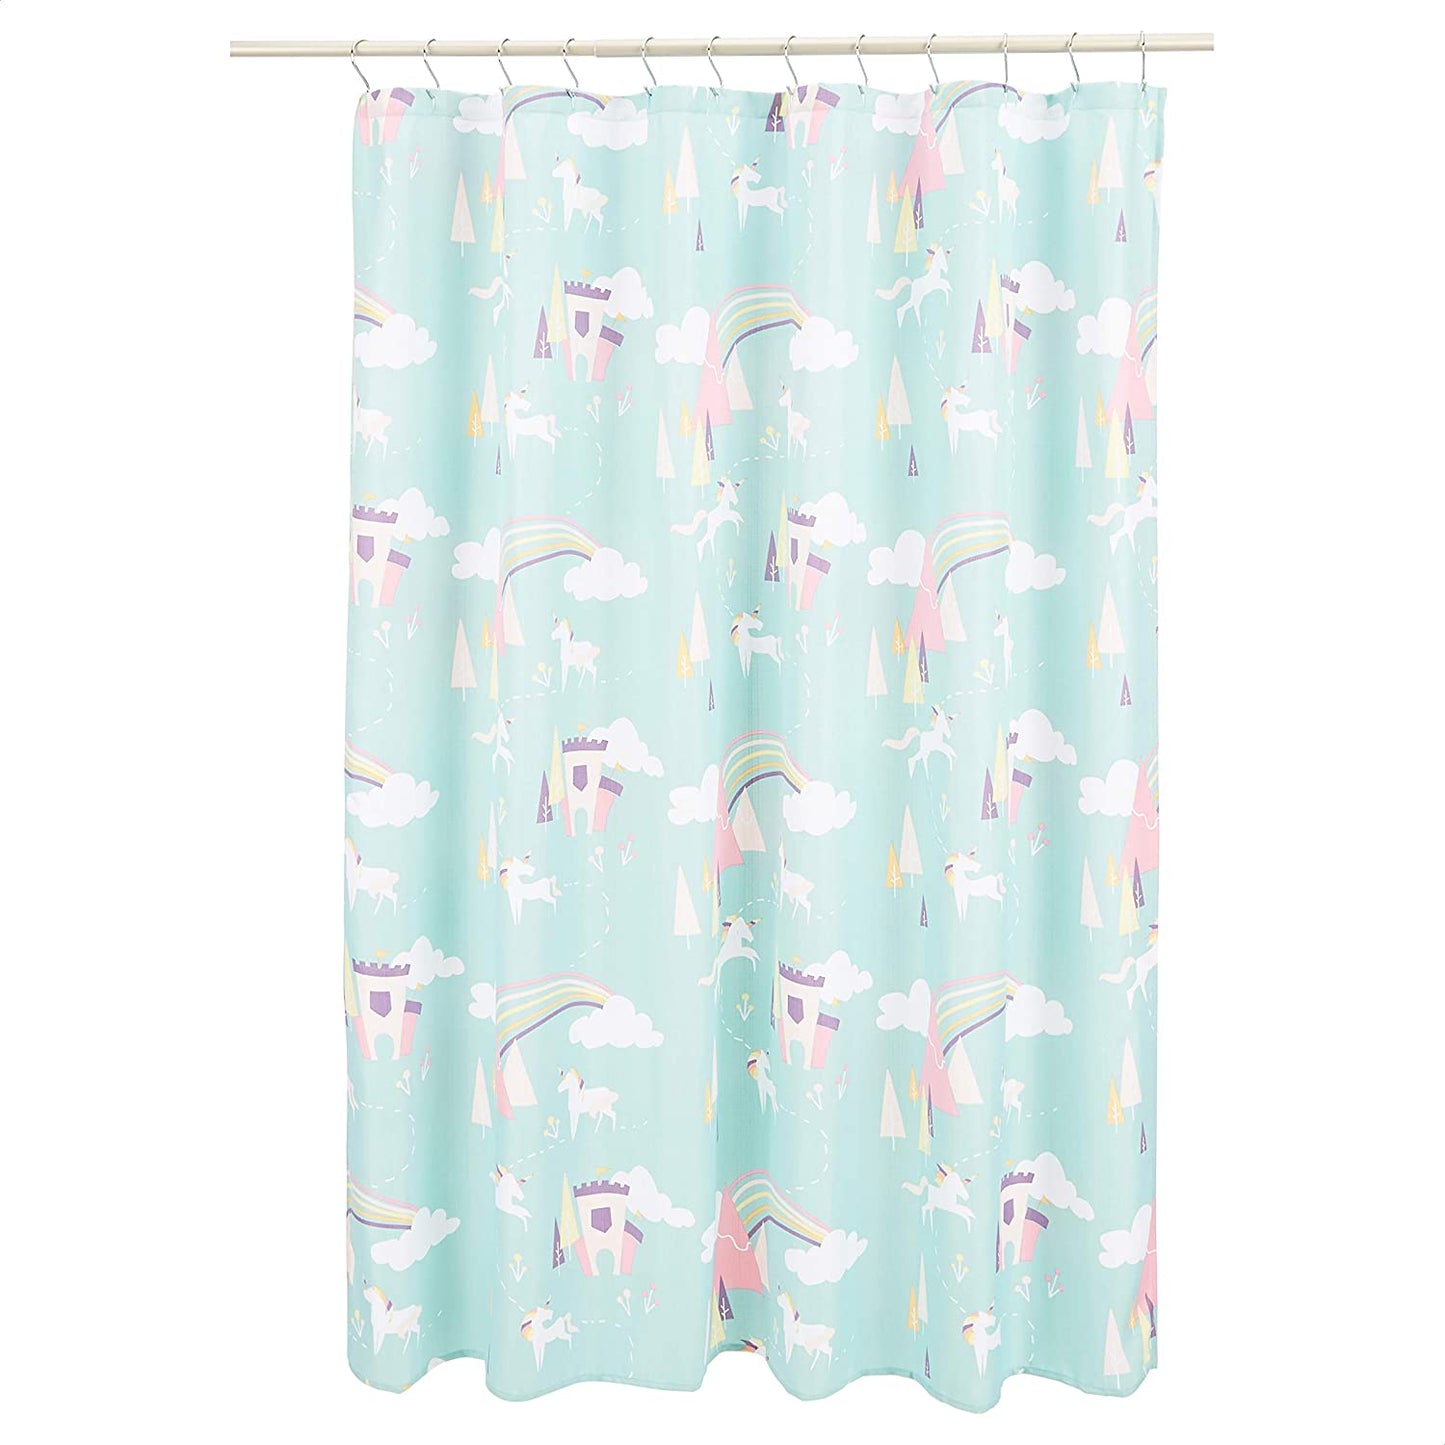 Kids Bathroom Shower Curtain - 72 Inch